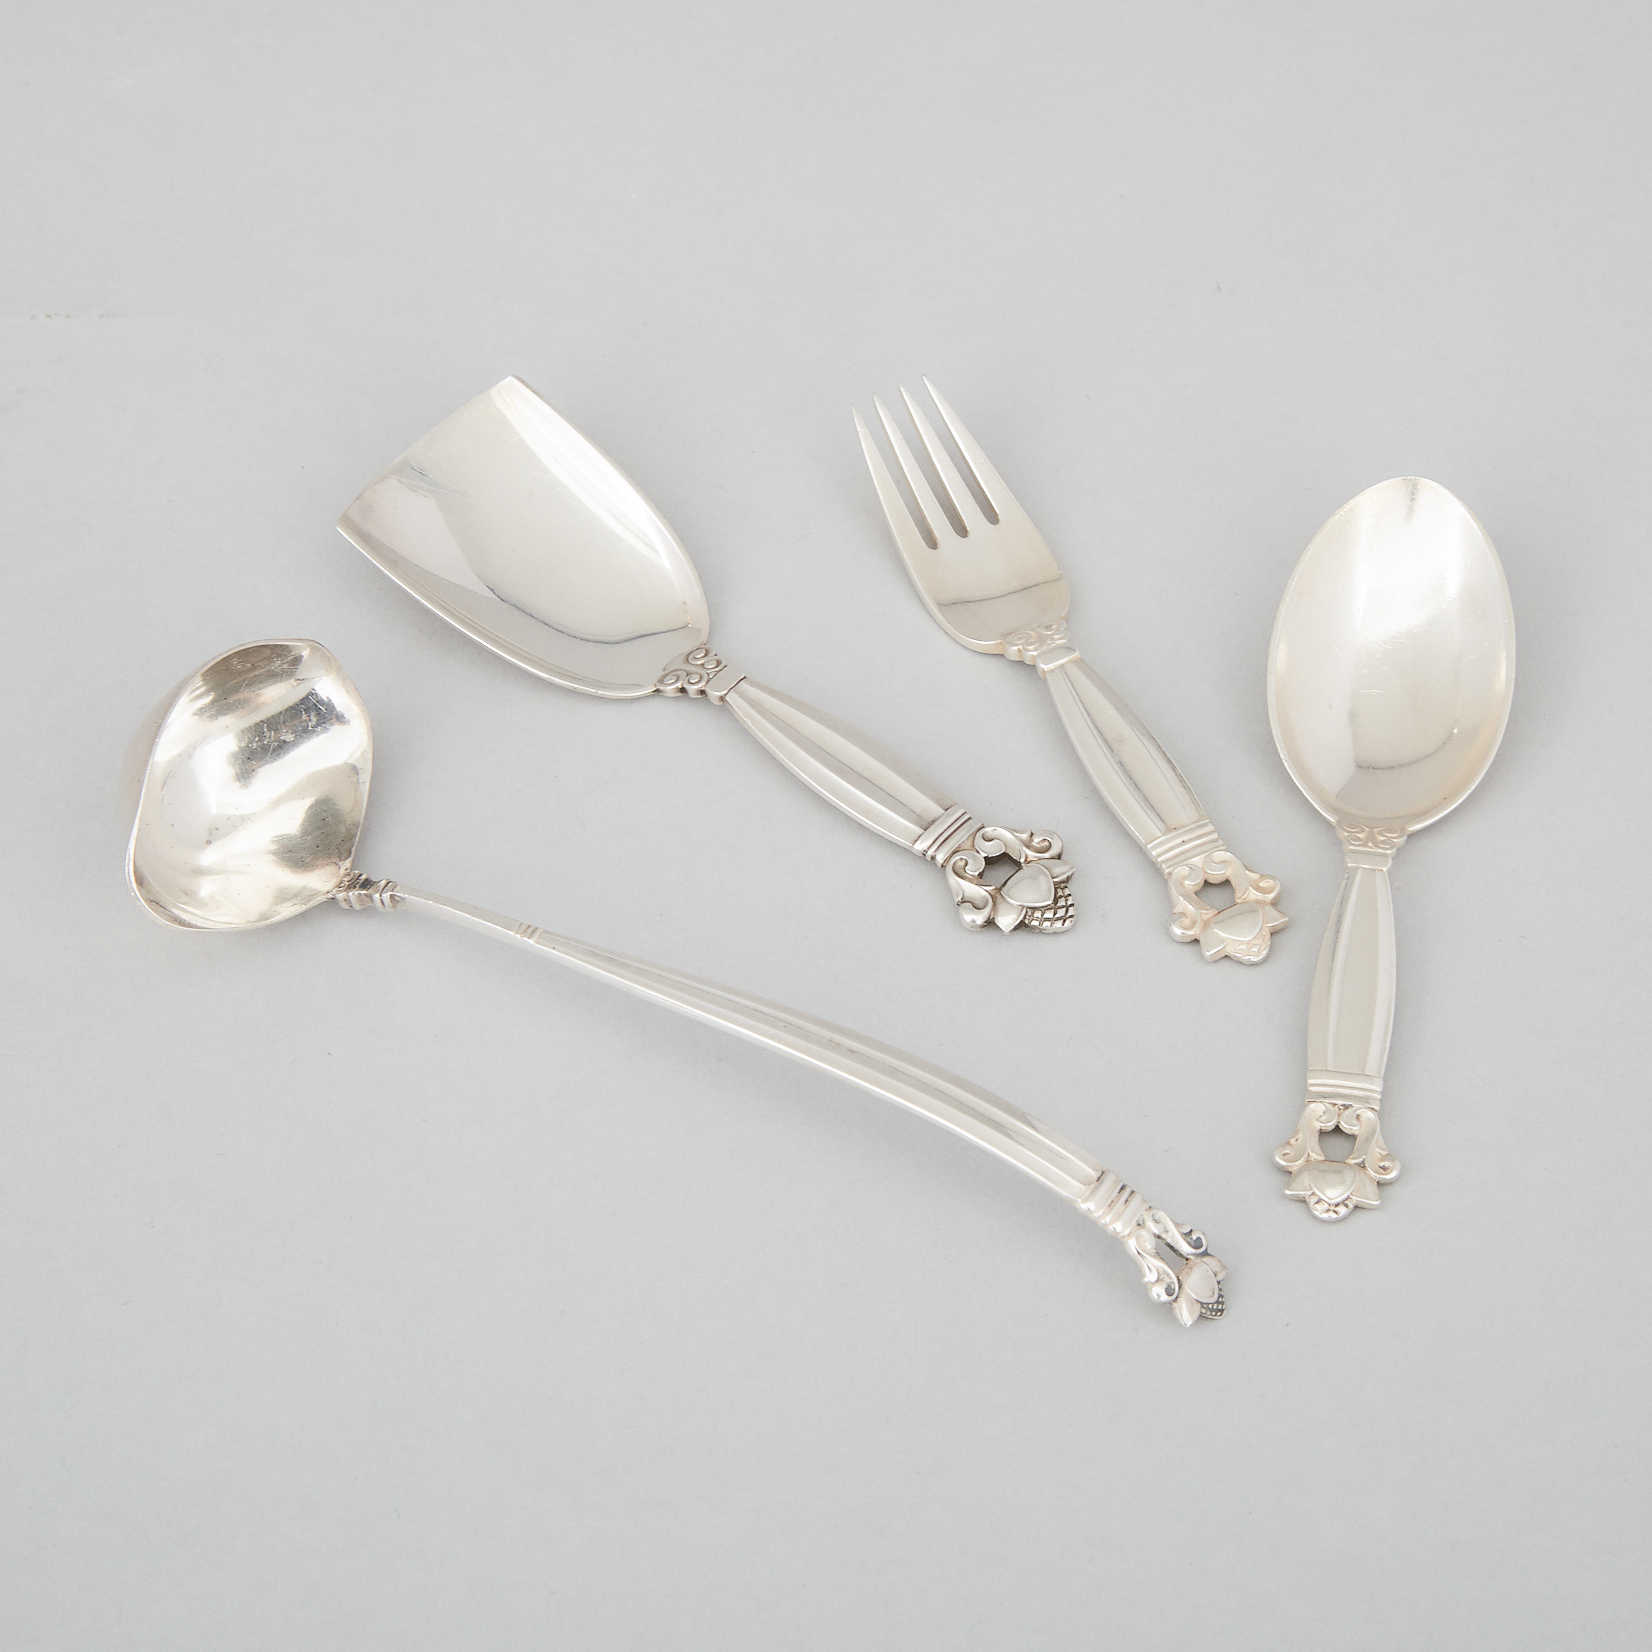 Danish Silver ‘Acorn’ Pattern Sauce Ladle, Sugar Shovel, Small Spoon and Fork, Johan Rohde for Georg Jensen, Copenhagen, 20th century